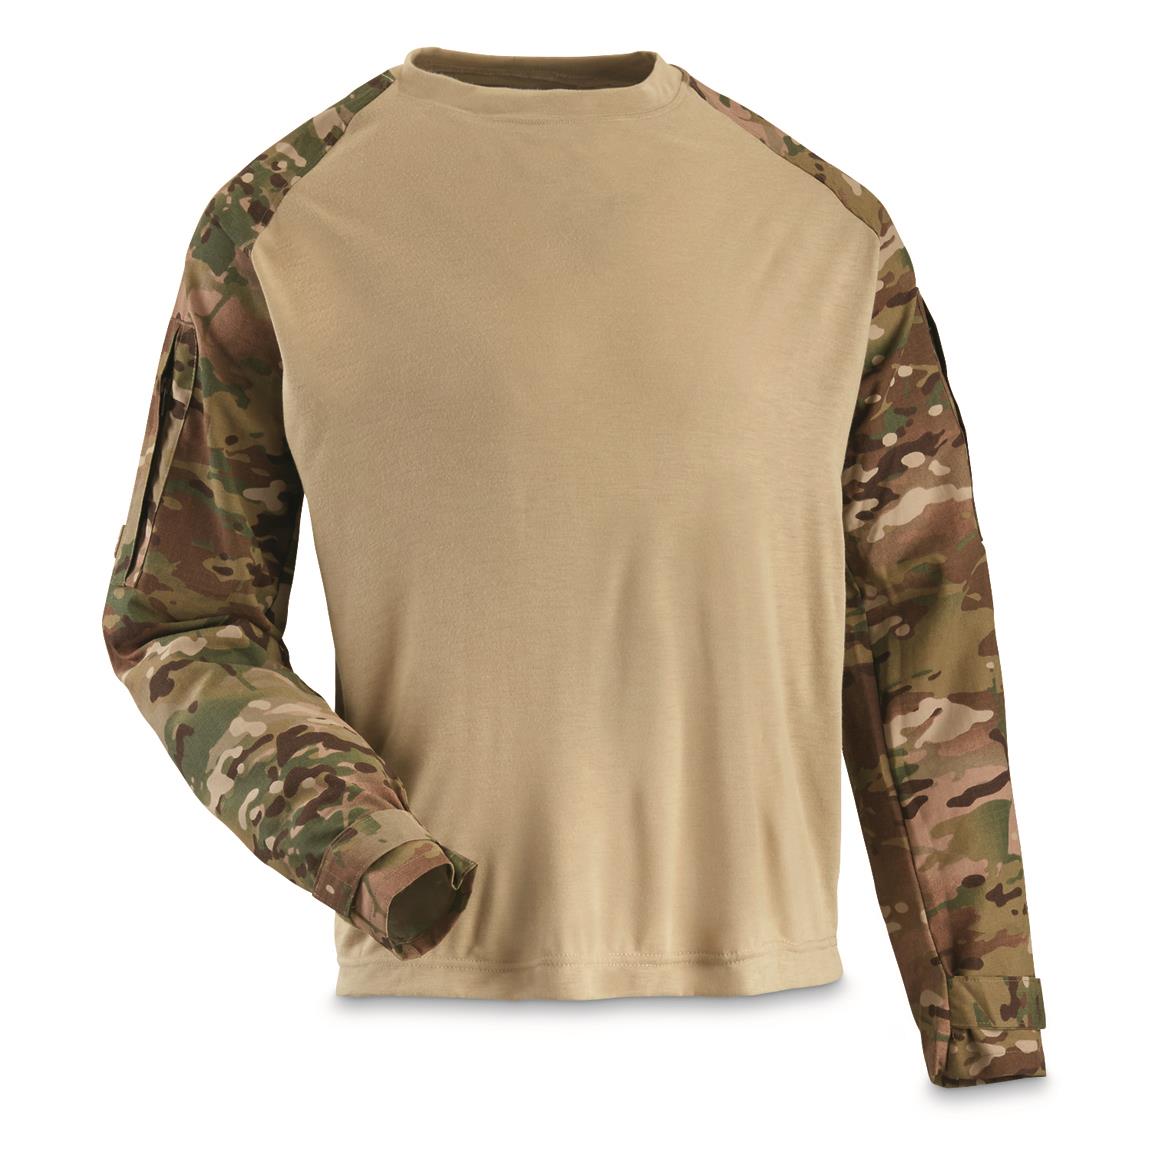 U.S. Military Surplus Flame Resistant Layer 2 Long Sleeve Combat Shirt, New, Multicam